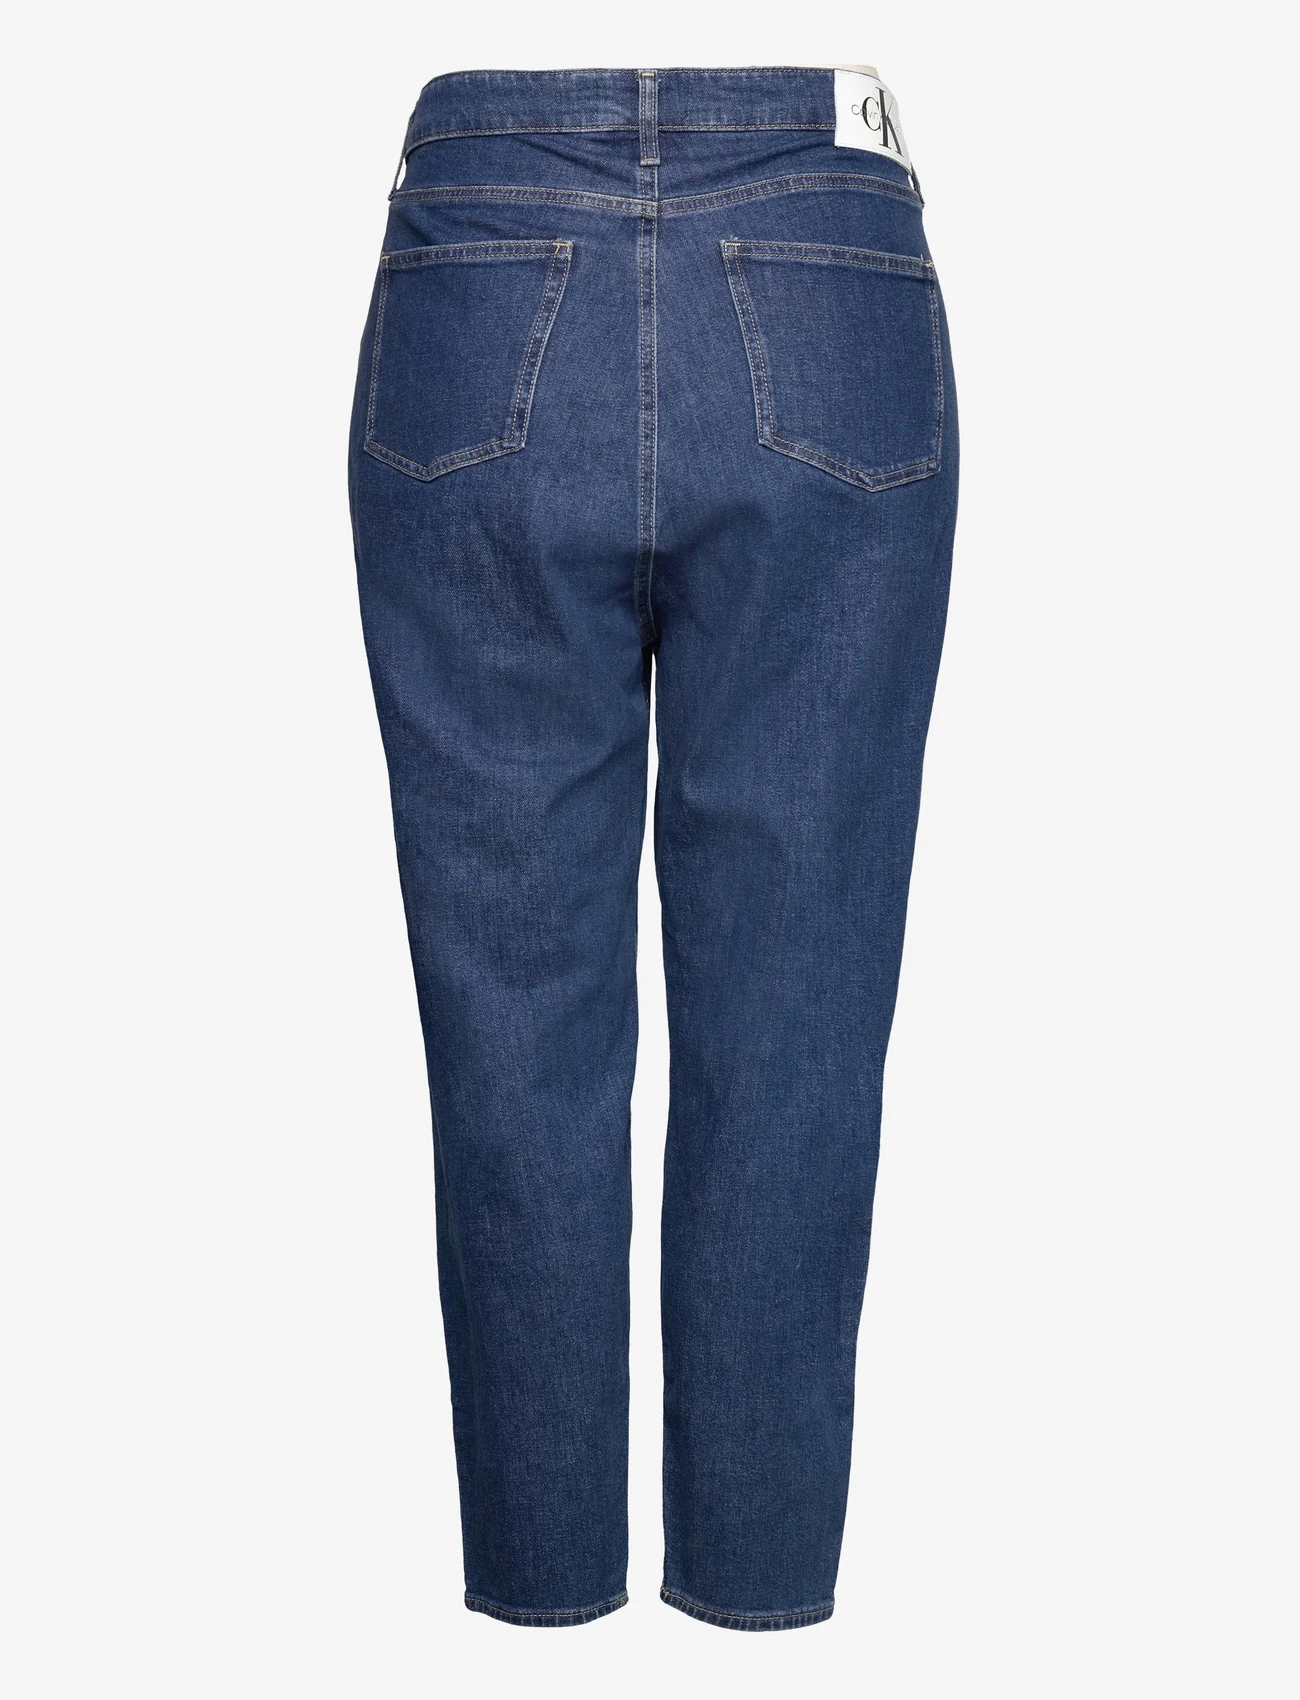 Calvin Klein Jeans - MOM JEAN PLUS - mom-jeans - denim medium - 1